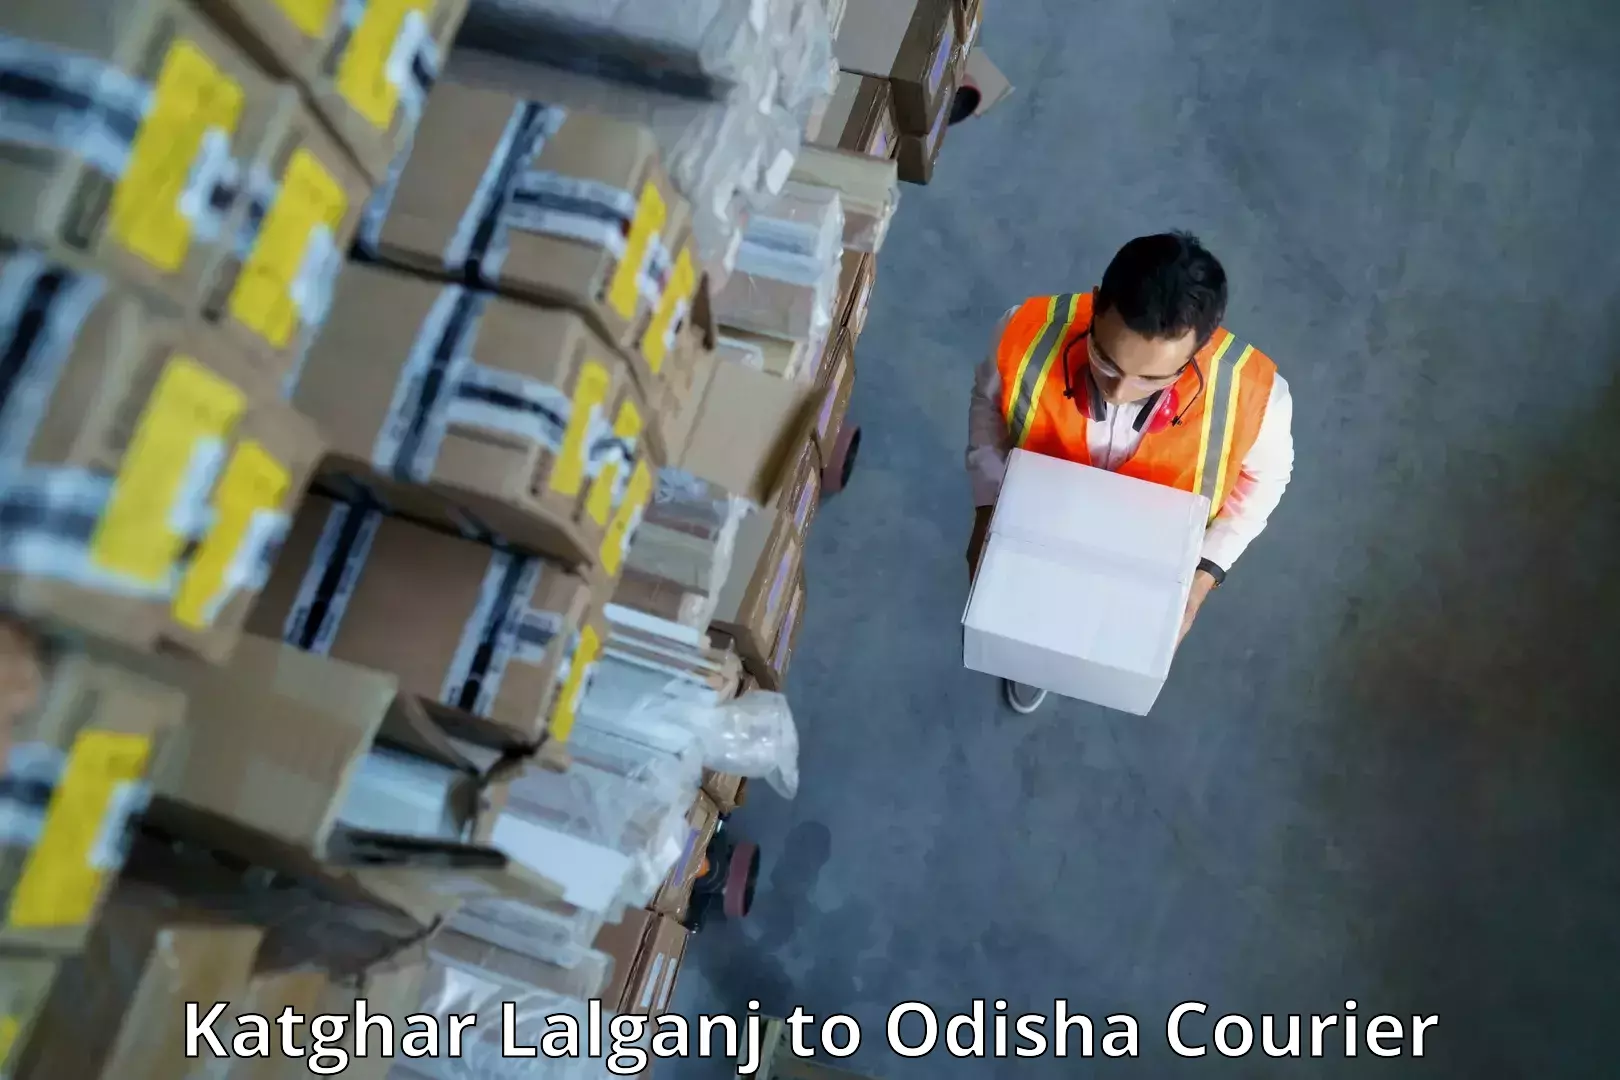 Courier service partnerships Katghar Lalganj to Boudh